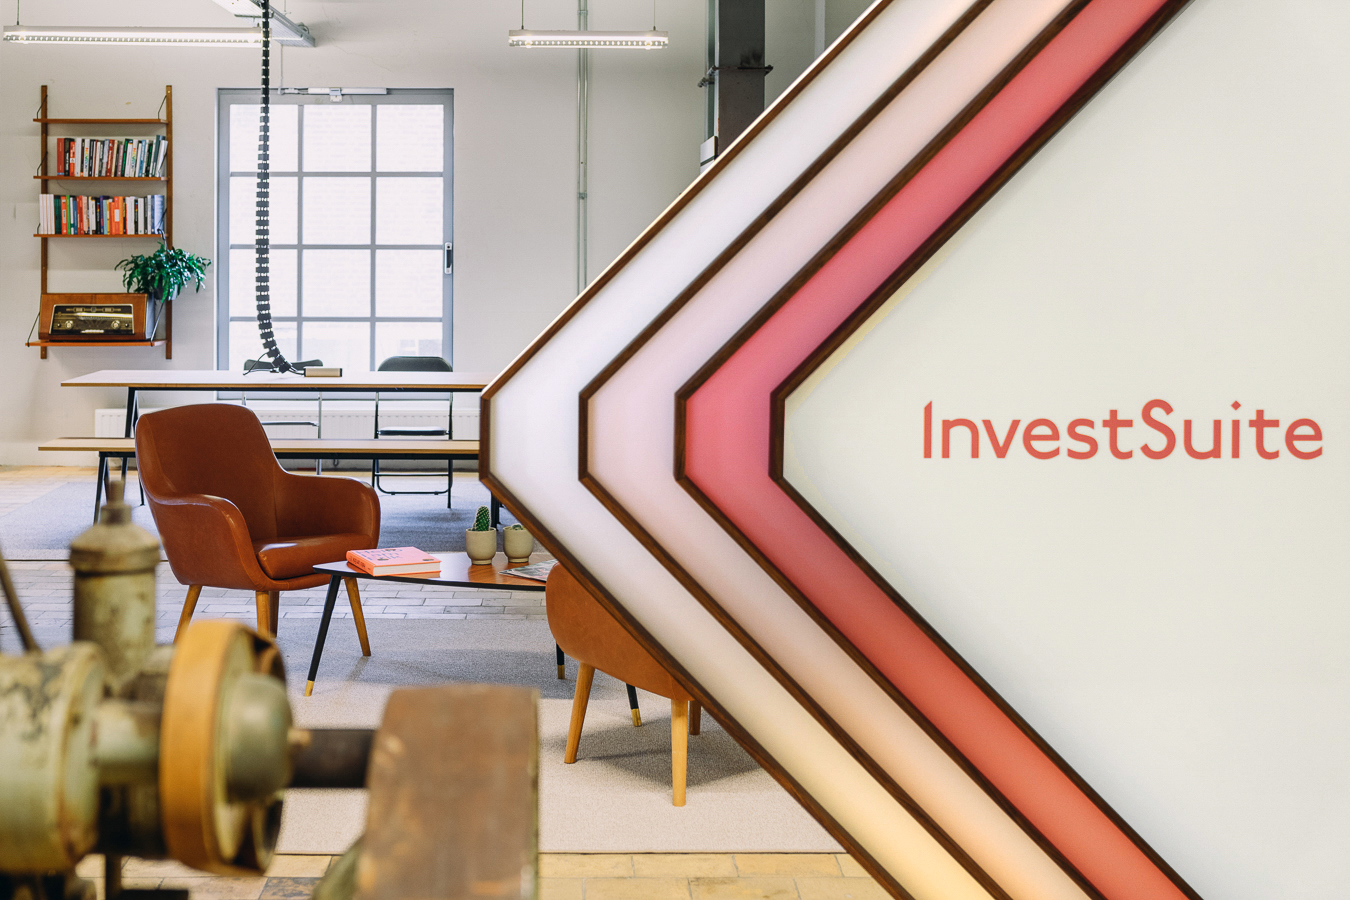 WealthTech startup InvestSuite raises €2 million